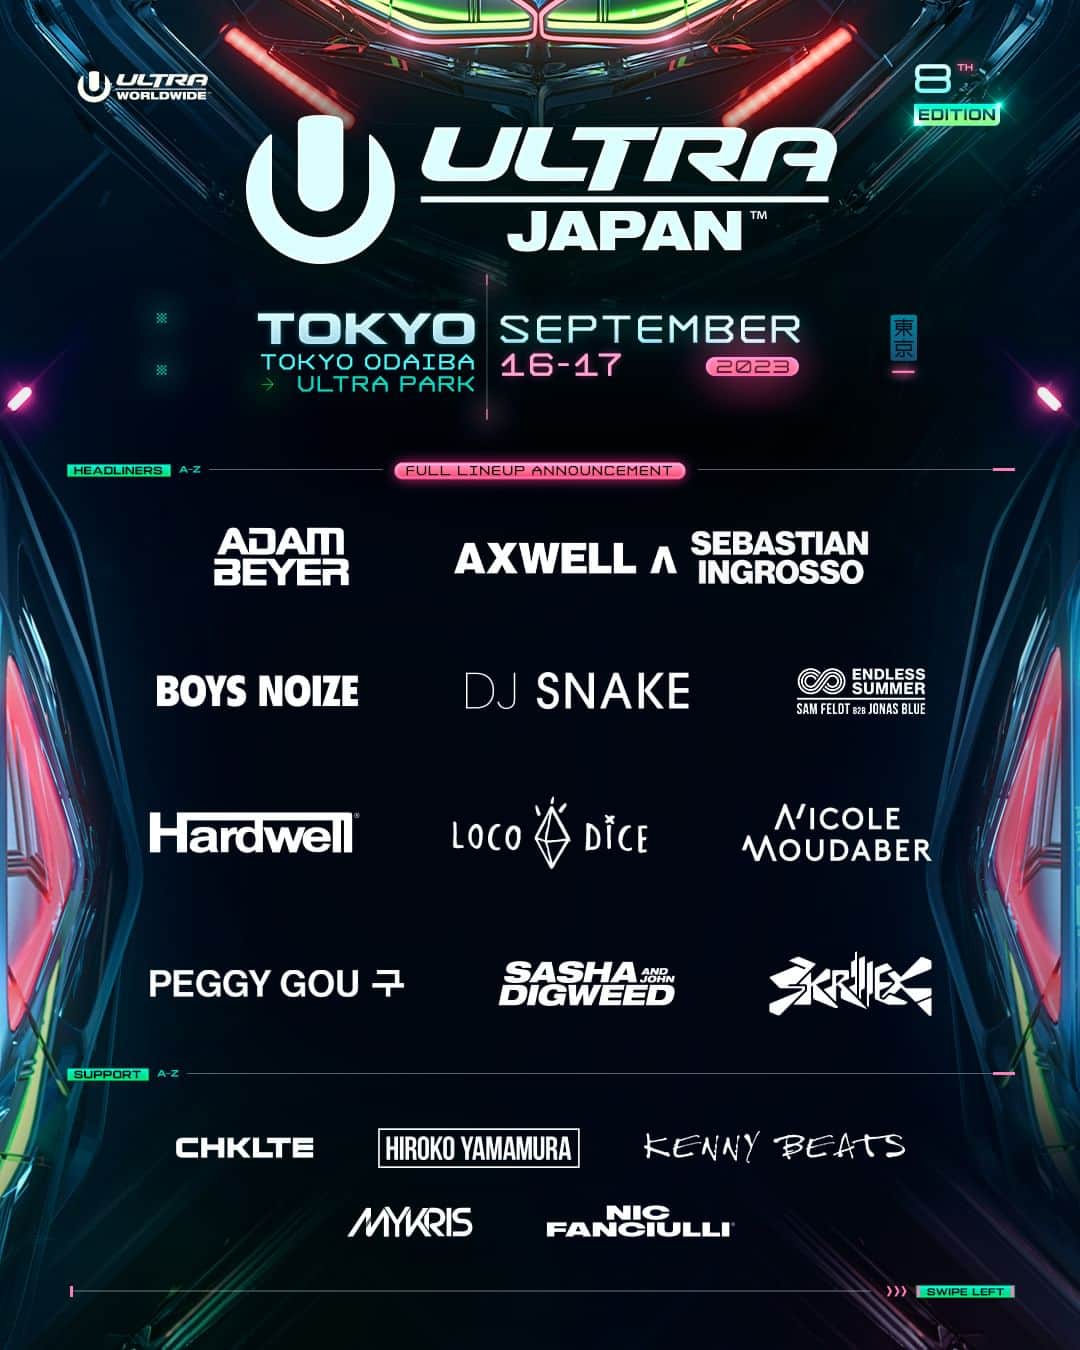 Ultra Japanのインスタグラム：「ULTRA JAPAN 2023 フルラインナップ発表!!!🔥 そして、日割りスケジュールも併せて発表!!🙌💥 パワーアップしたメインステージと、 今年復活したRESISTANCEを彩る、 過去最高級のアーティストに逢いに行こう！🎶🔥  ⚡1 DAY TICKET好評発売!! >> @ultrajapan   The full lineup has been announced!🔥 And the daily timetable has been announced as well!🙌💥  The main stage has been powered up, while the RESISTANCE has been revived this year! Come and see the finest artists ever to grace our stages at this year's revived ULTRA JAPAN!🎶🔥  ⚡TICKETS ON SALE NOW >> @ultrajapan  Featuring — ■DAY 1（9.16 SAT） 【ULTRA MAIN STAGE】 ・ @djsnake  ・Axwell Λ Sebastian Ingrosso  @axwell  @sebastianingrosso  ・ @hardwell  ・Endless Summer  @samfeldt  @jonasblue  ・ @djmykris  ・TYT  @djtora_jpn  @djyaksa  @tjo_dj  ・ @arescarter  ・ @kiyoto__jpn ・ @djmii_m  【RESISTANCE】 ・ @realadambeyer  ・ @nicolemoudaber  ・ @hiroko__yamamura ・ @chklte  ・ @drunkenkong  ・ @cartoon_catn  ・ @mihonojp   ■DAY 2（9.17 SUN） 【ULTRA MAIN STAGE】 ・ @skrillex  ・ @peggygou_ ・ @boysnoize  ・ @kennybeats  ・ Bopcorn  @george808_2wasted  @aspenlaws_nasa  ・ @kdhsound  ・ @dj__aoy ・ @jeonghyeonmusic  ・ @aki_hiromusic   【RESISTANCE】 ・ @locodiceofc  ・Sasha & Digweed  @djsashaofficial  @djjohndigweed  ・ @nicfanciulli  ・ @takkyuishino  ・ @djosamum  ・ @licaxxx1  ・ @daljaemusic   #ultrajapan #ultrajapan2023 #ウルトラジャパン #ResistanceTokyo」